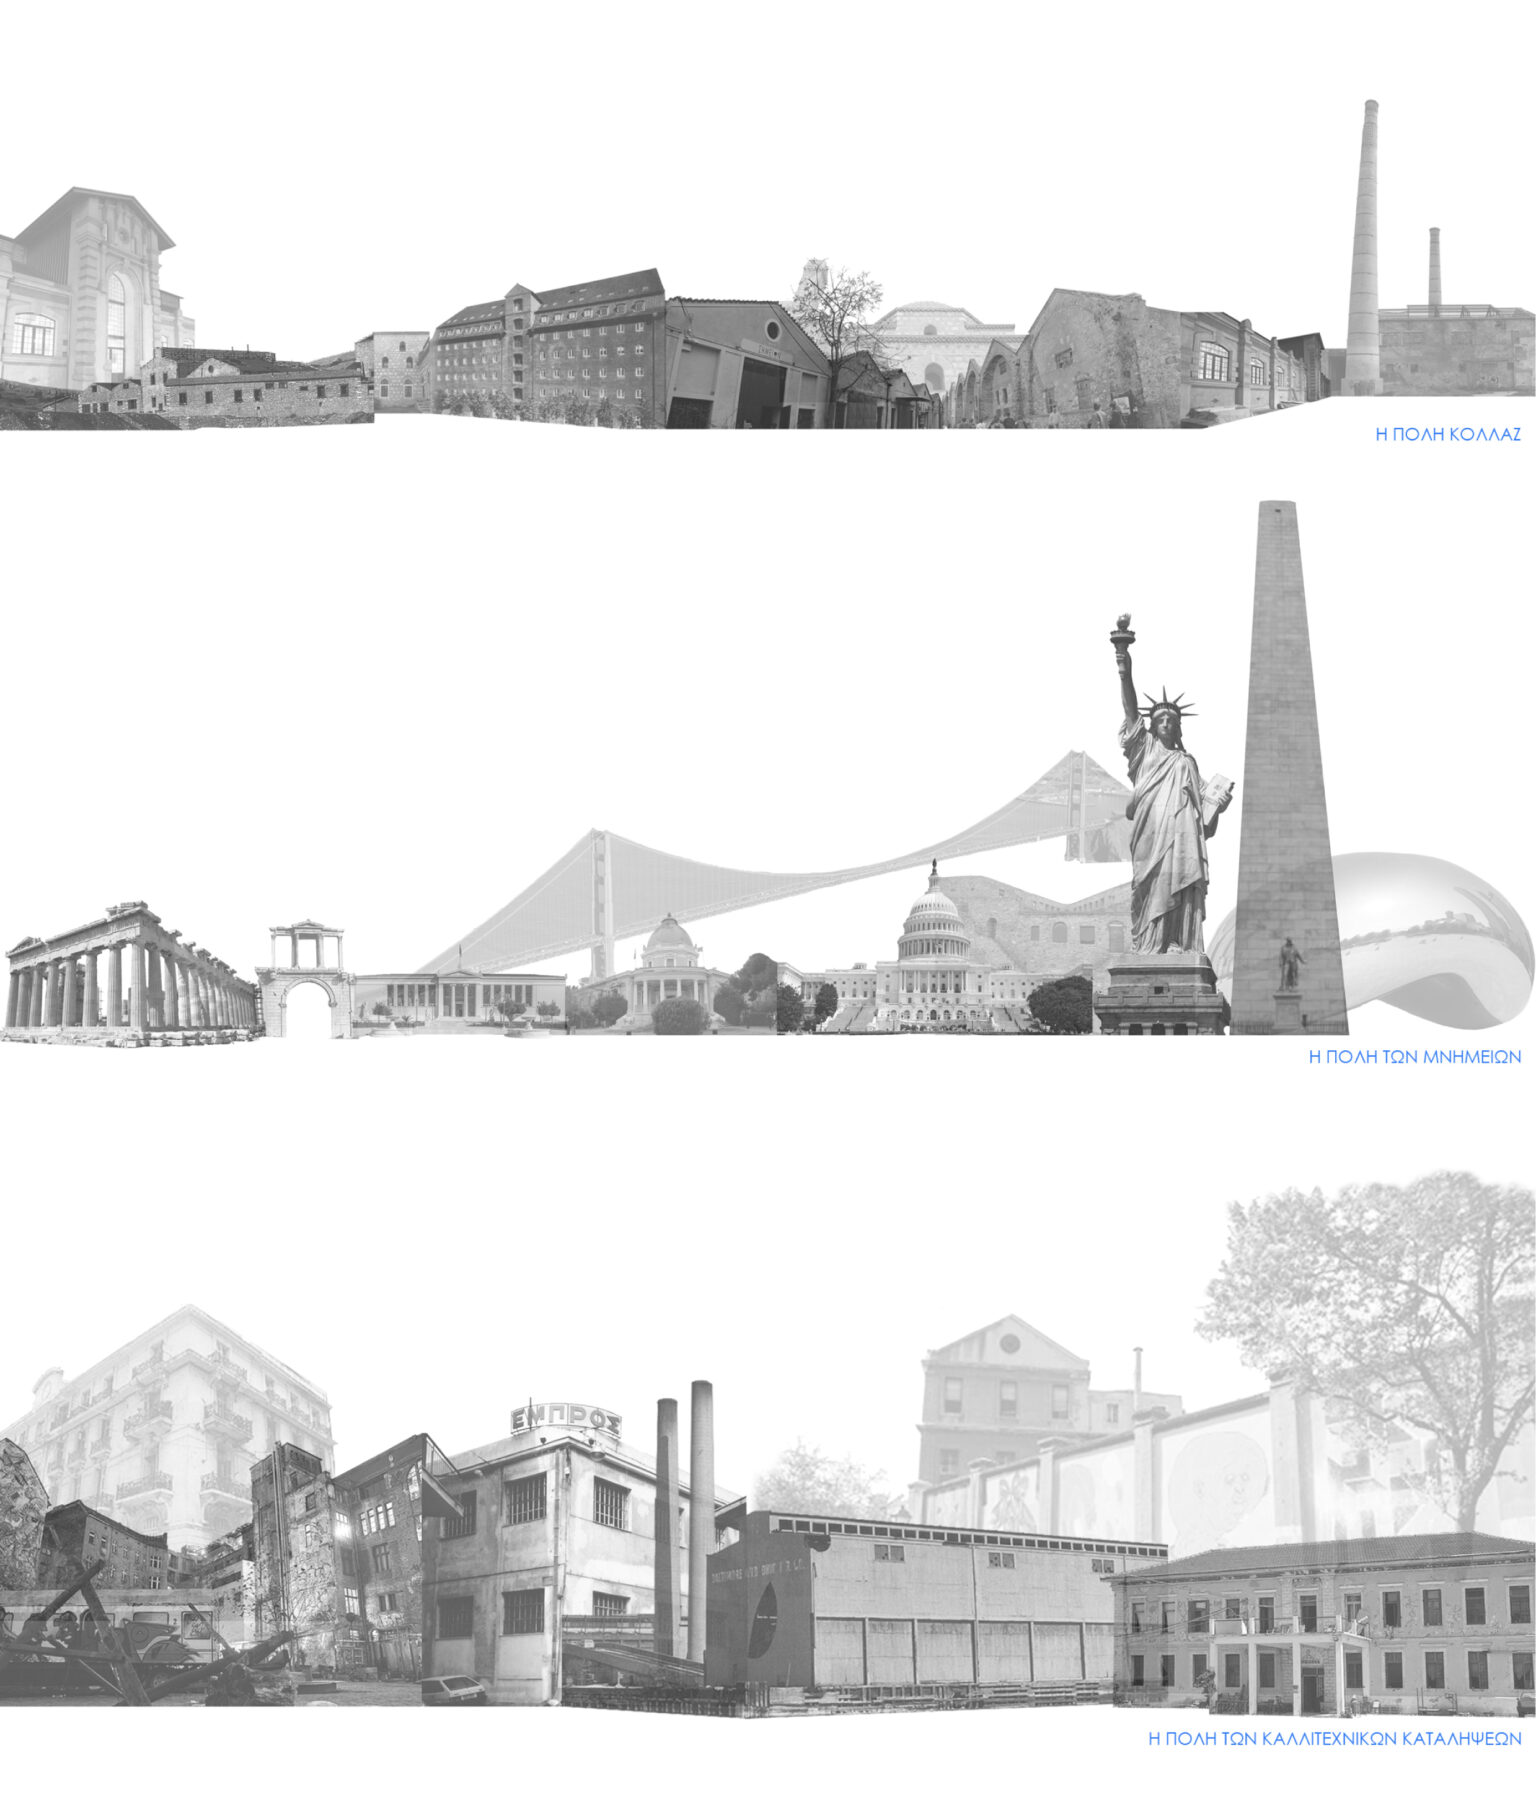 Archisearch Αρχιτεκτονική της επανάχρησης: εννοιολογικές συνθέσεις στο χώρο & το χρόνο | Ερευνητική εργασία από την Μαρία Φουστάνου